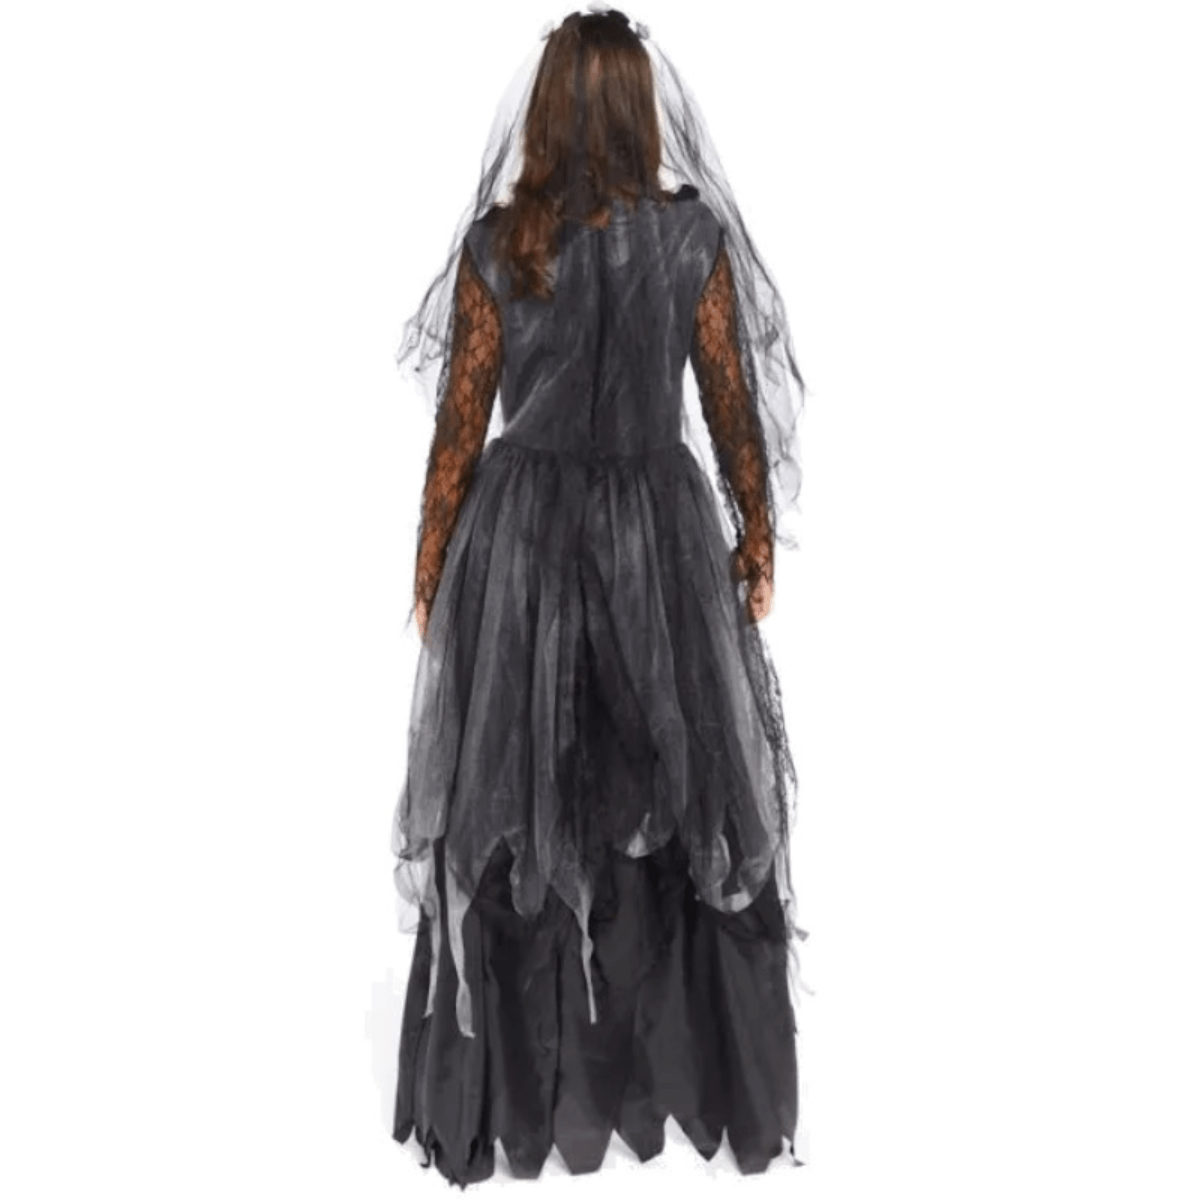 Corpse Bride Kostyme - One Size